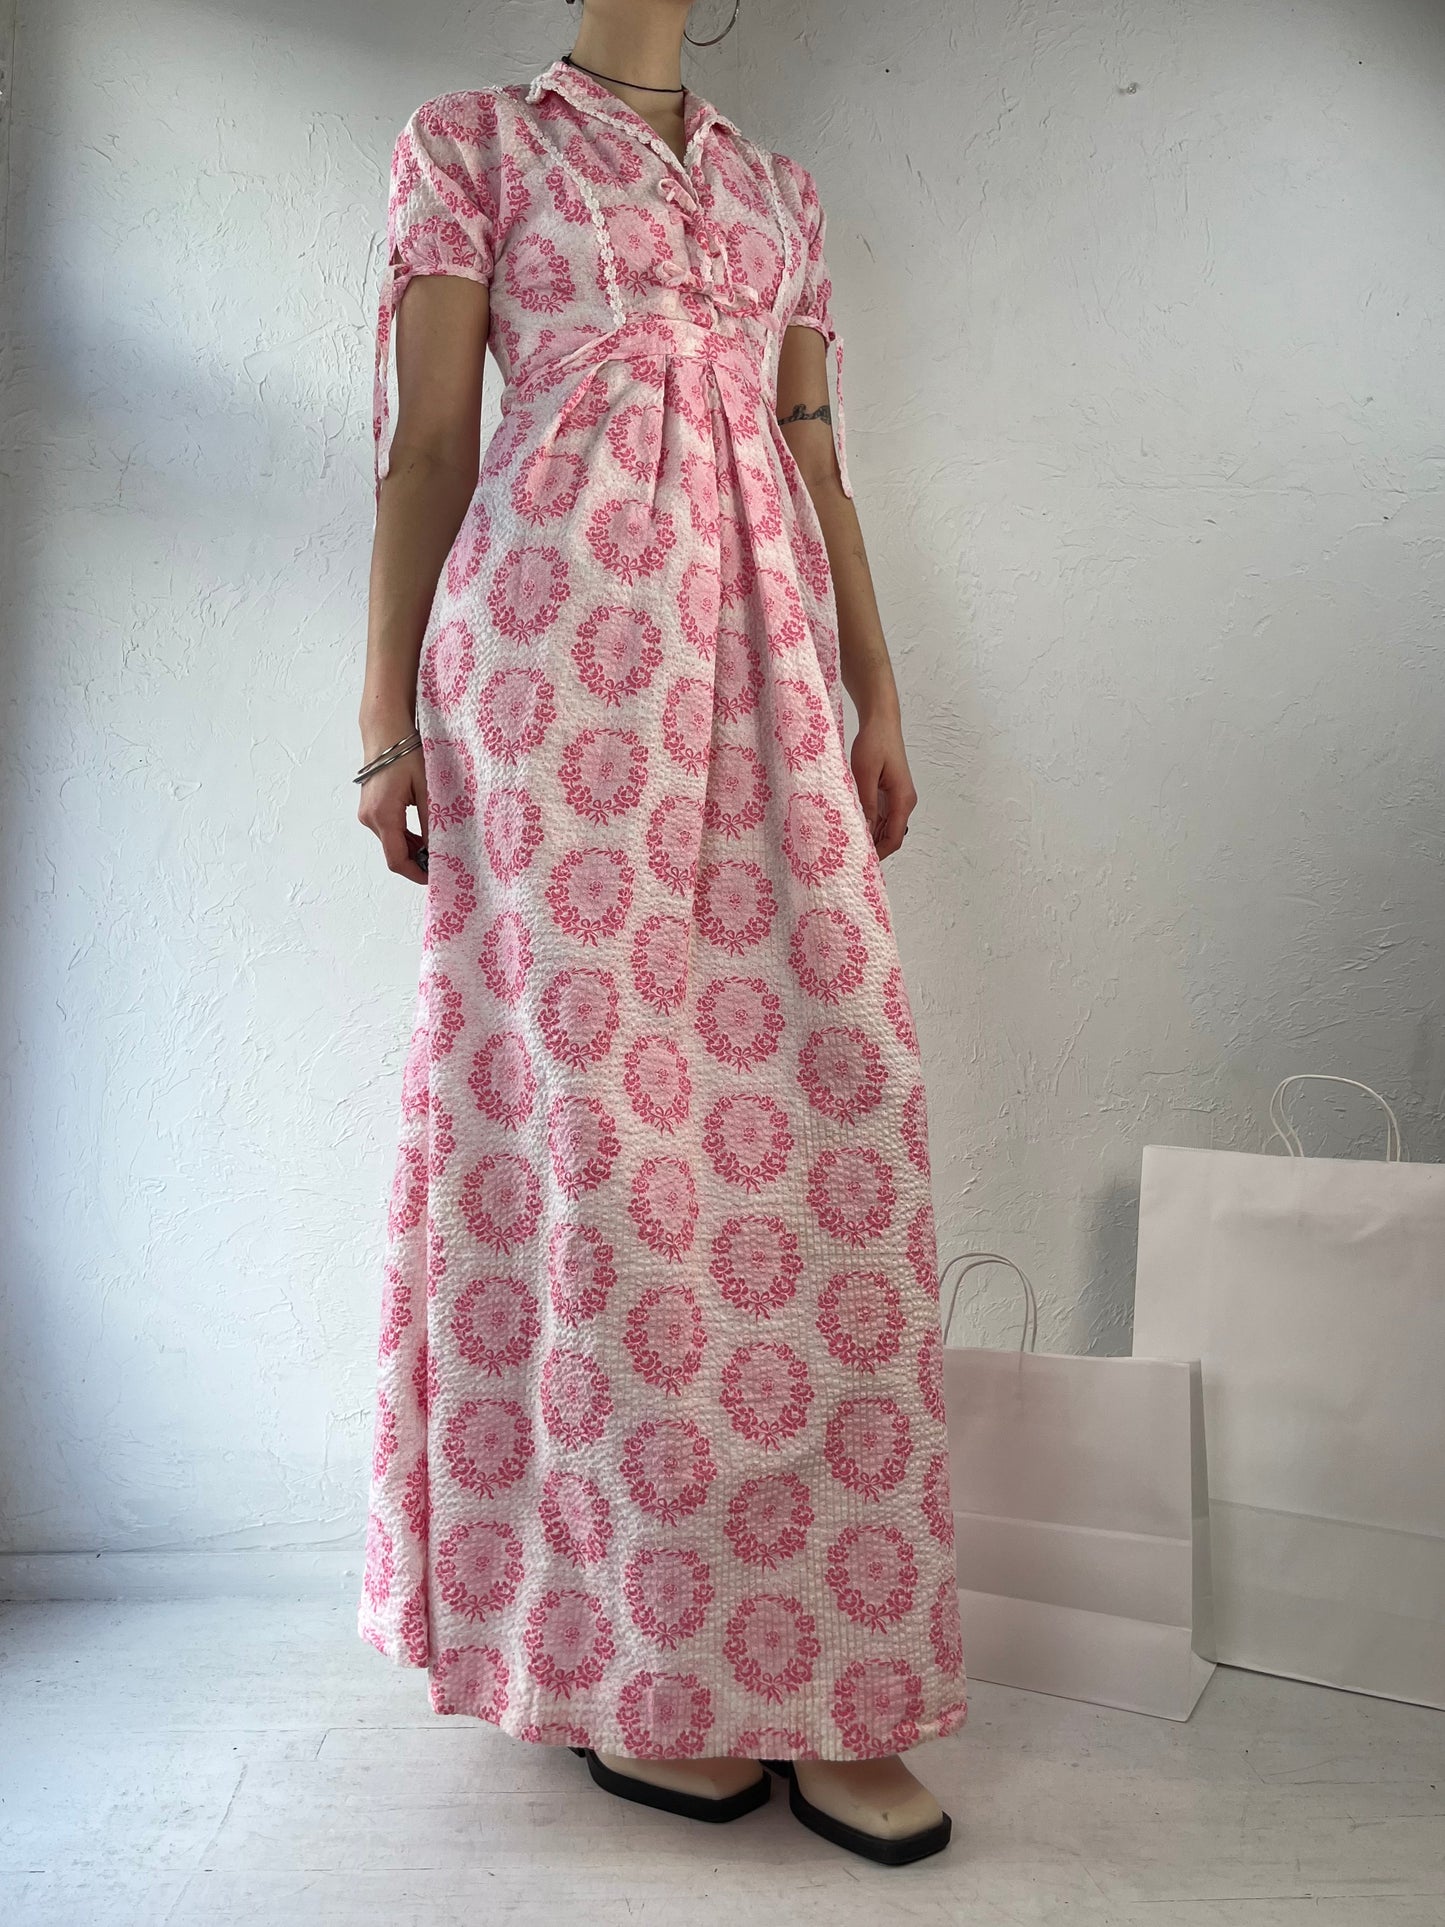 70s Handmade Pink Floral Print Maxi Dress / Small